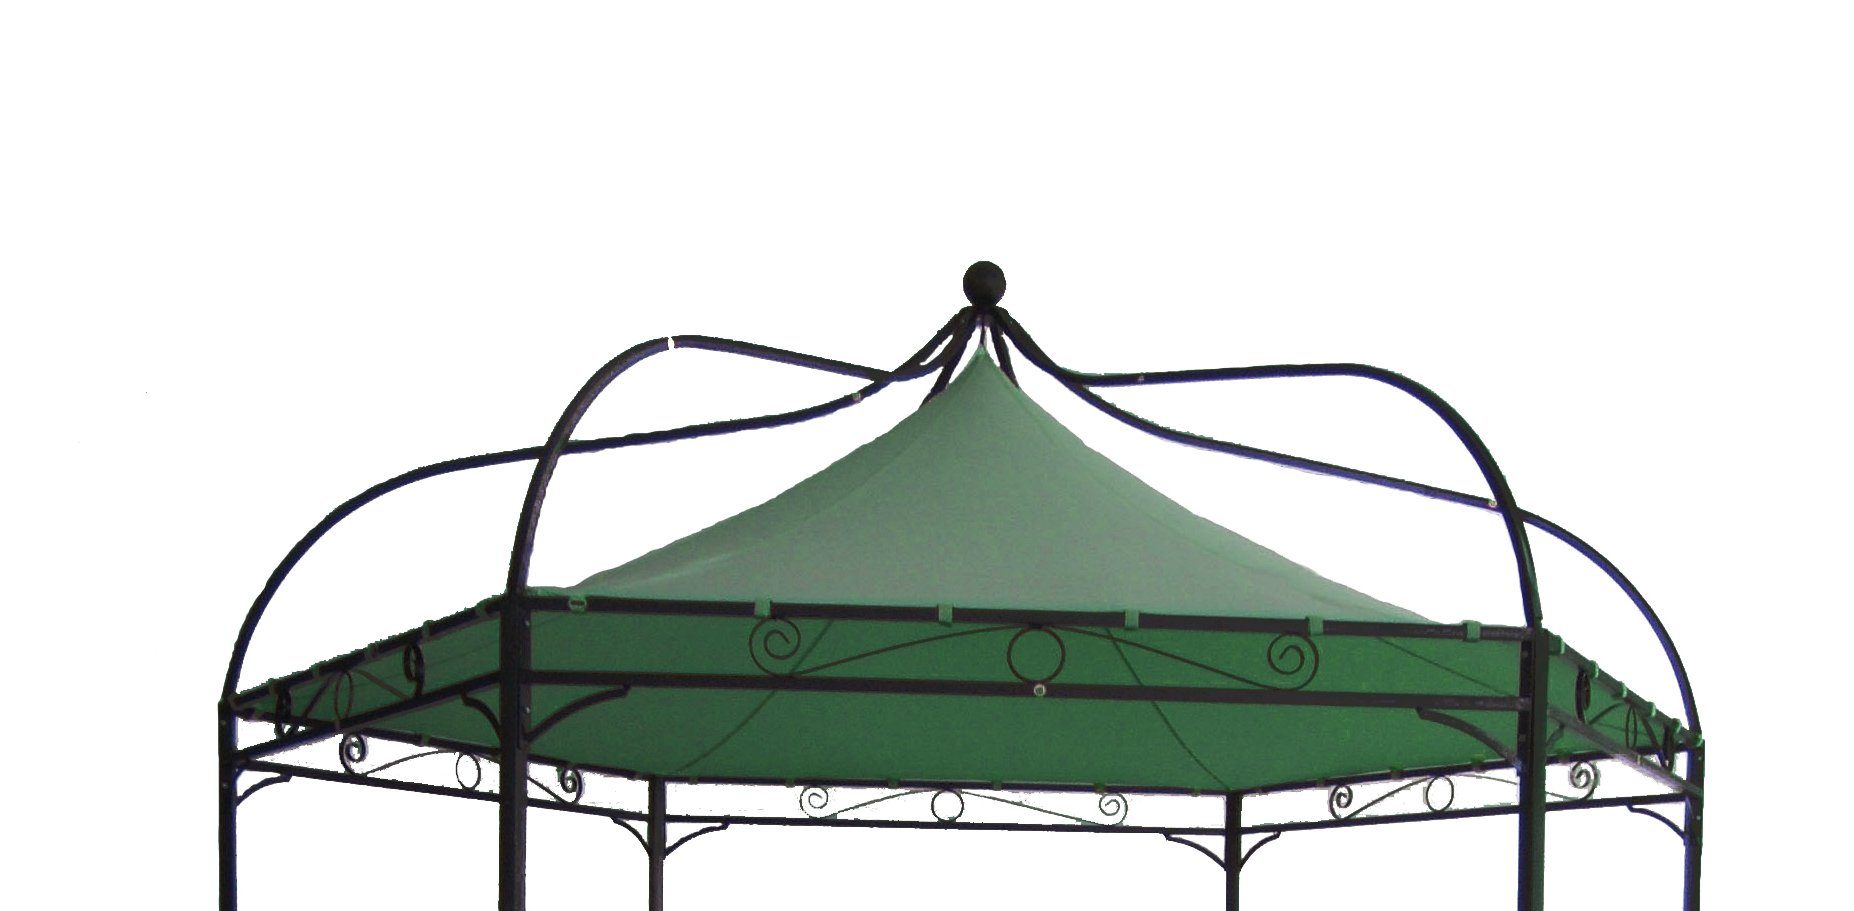 DEGAMO Pavillon-Ersatzdach MODENA, 6-eckig 320cm Durchmesser, Farbe dunkelgrün, wasserdicht